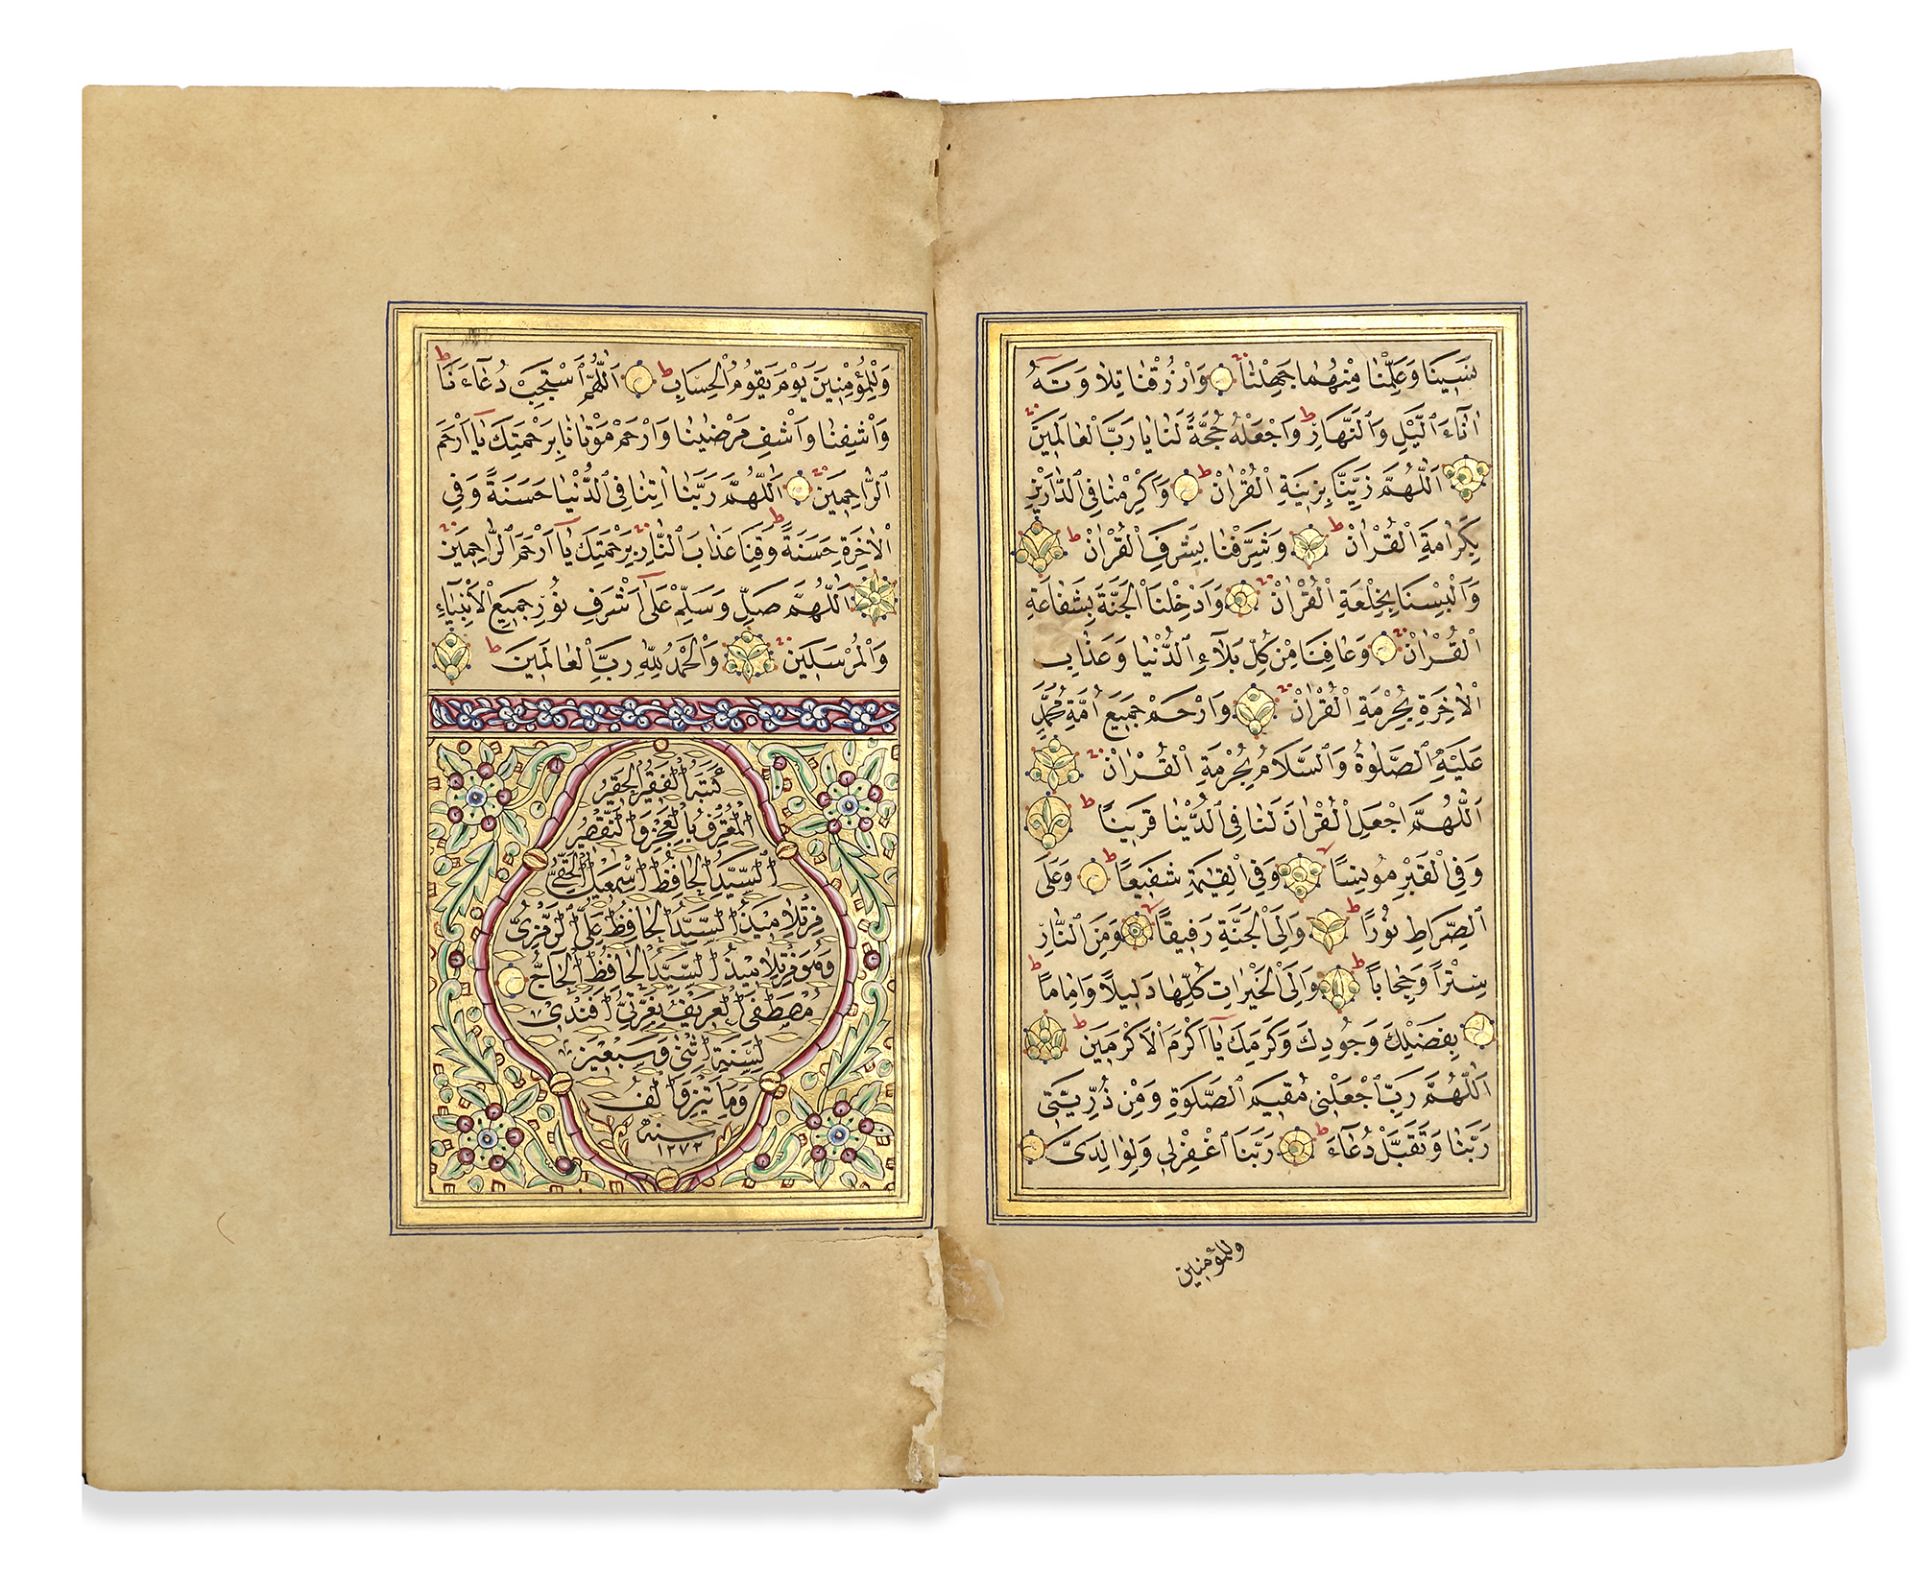 AN ILLUMINATED OTTOMAN QURAN BY HAFIZ ISMAIL HAKKI, TURKEY, 1272 AH/1855 AD - Image 3 of 4